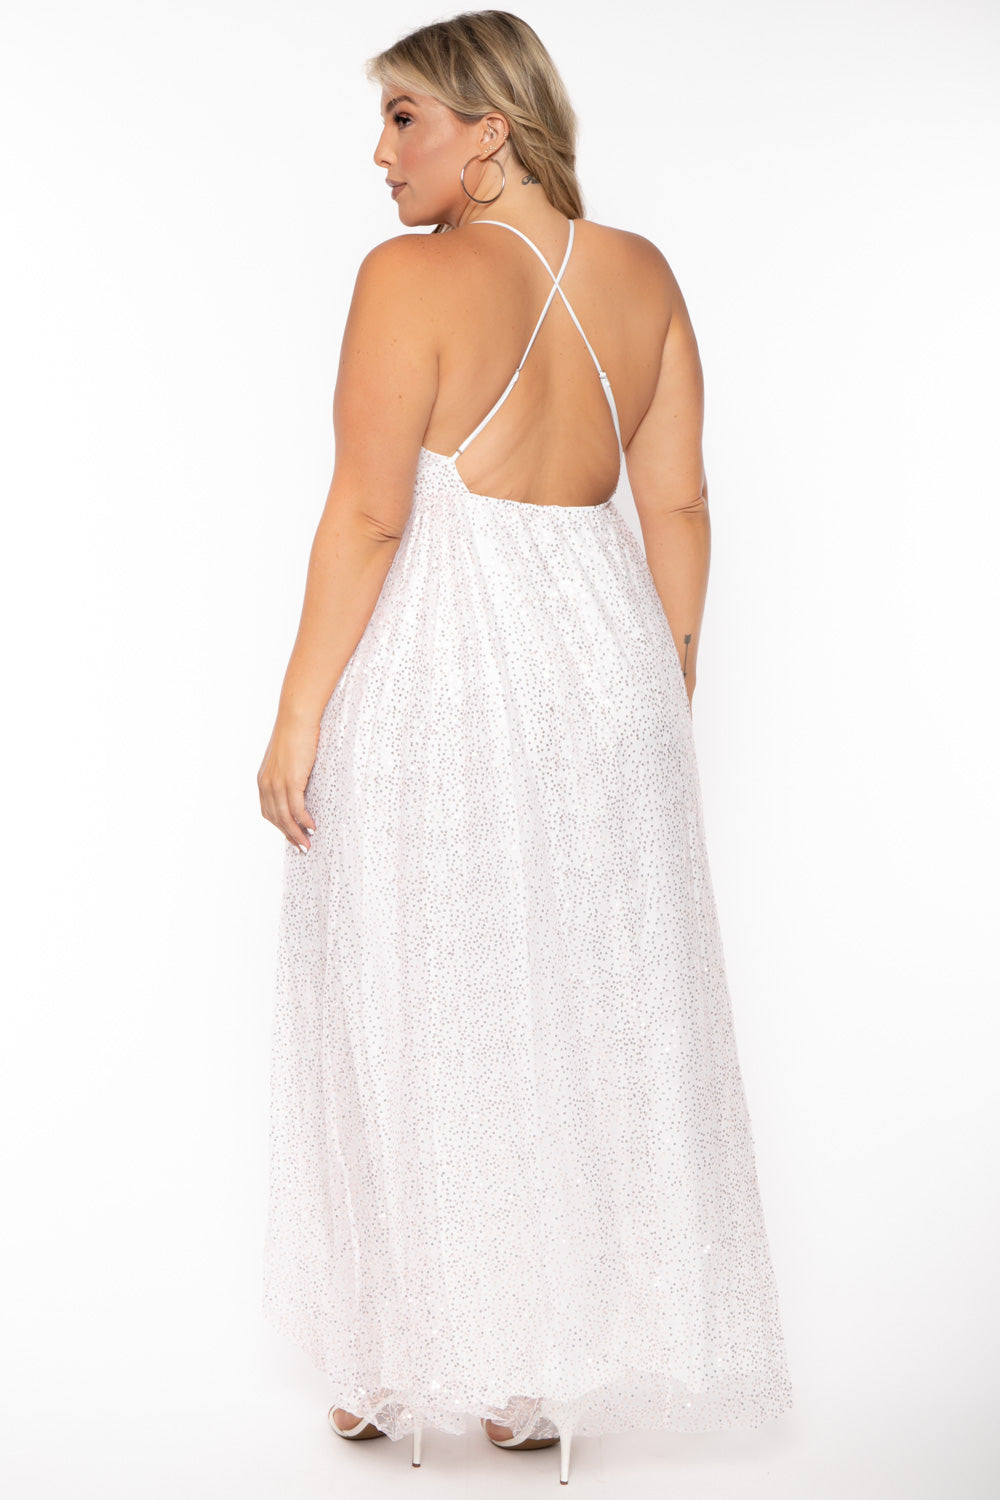 white maxi dress